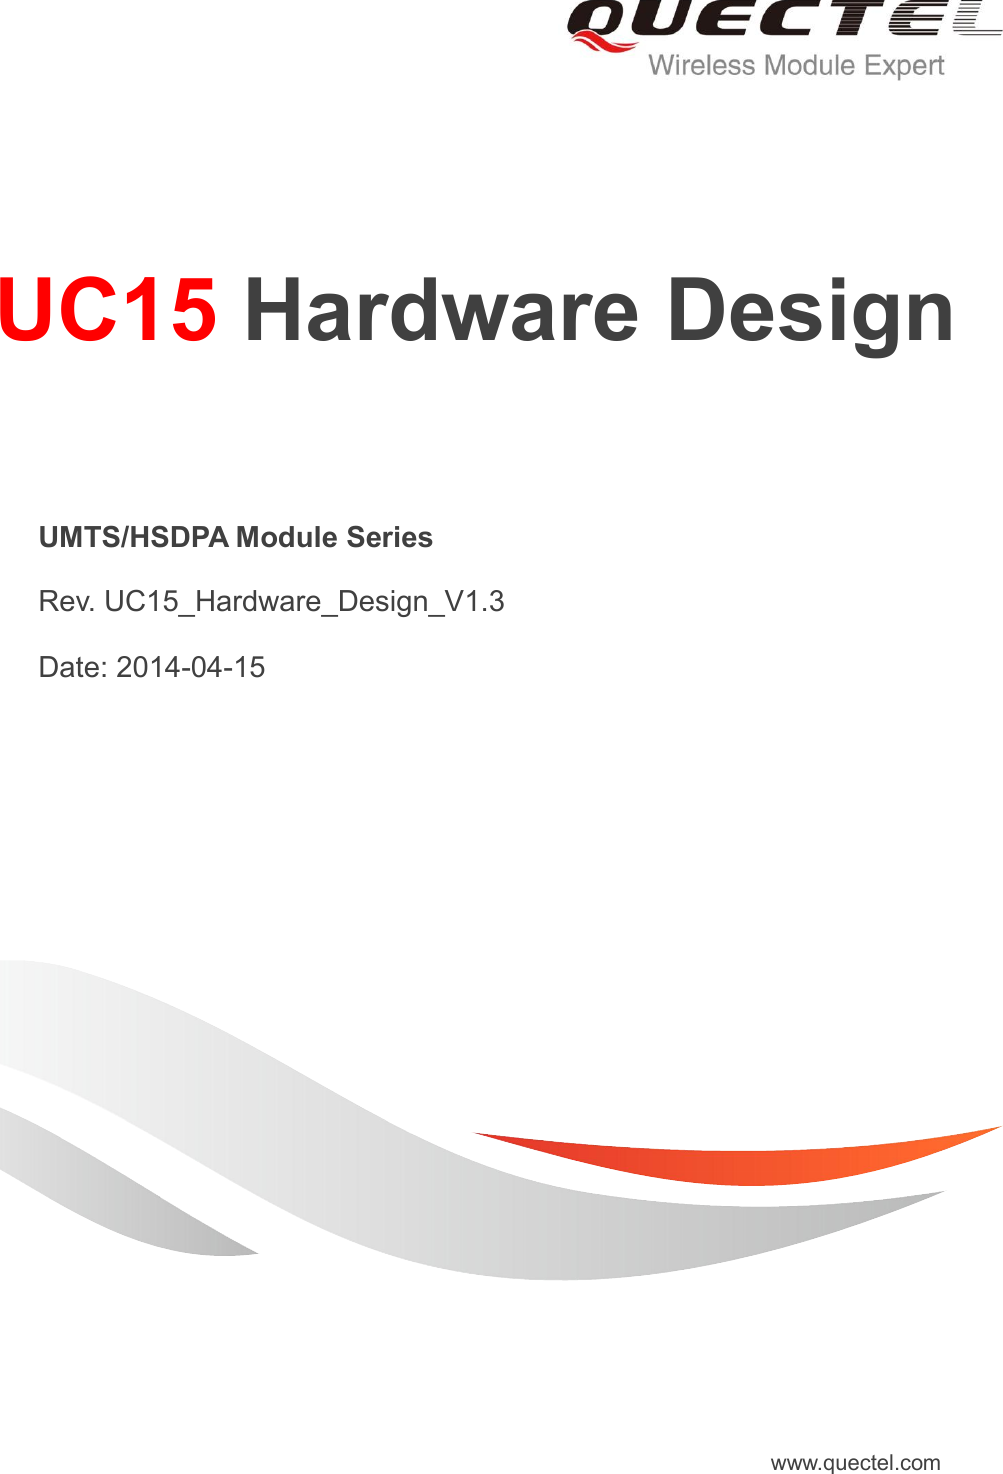     UC15 Hardware Design   UMTS/HSDPA Module Series   Rev. UC15_Hardware_Design_V1.3   Date: 2014-04-15 www.quectel.com